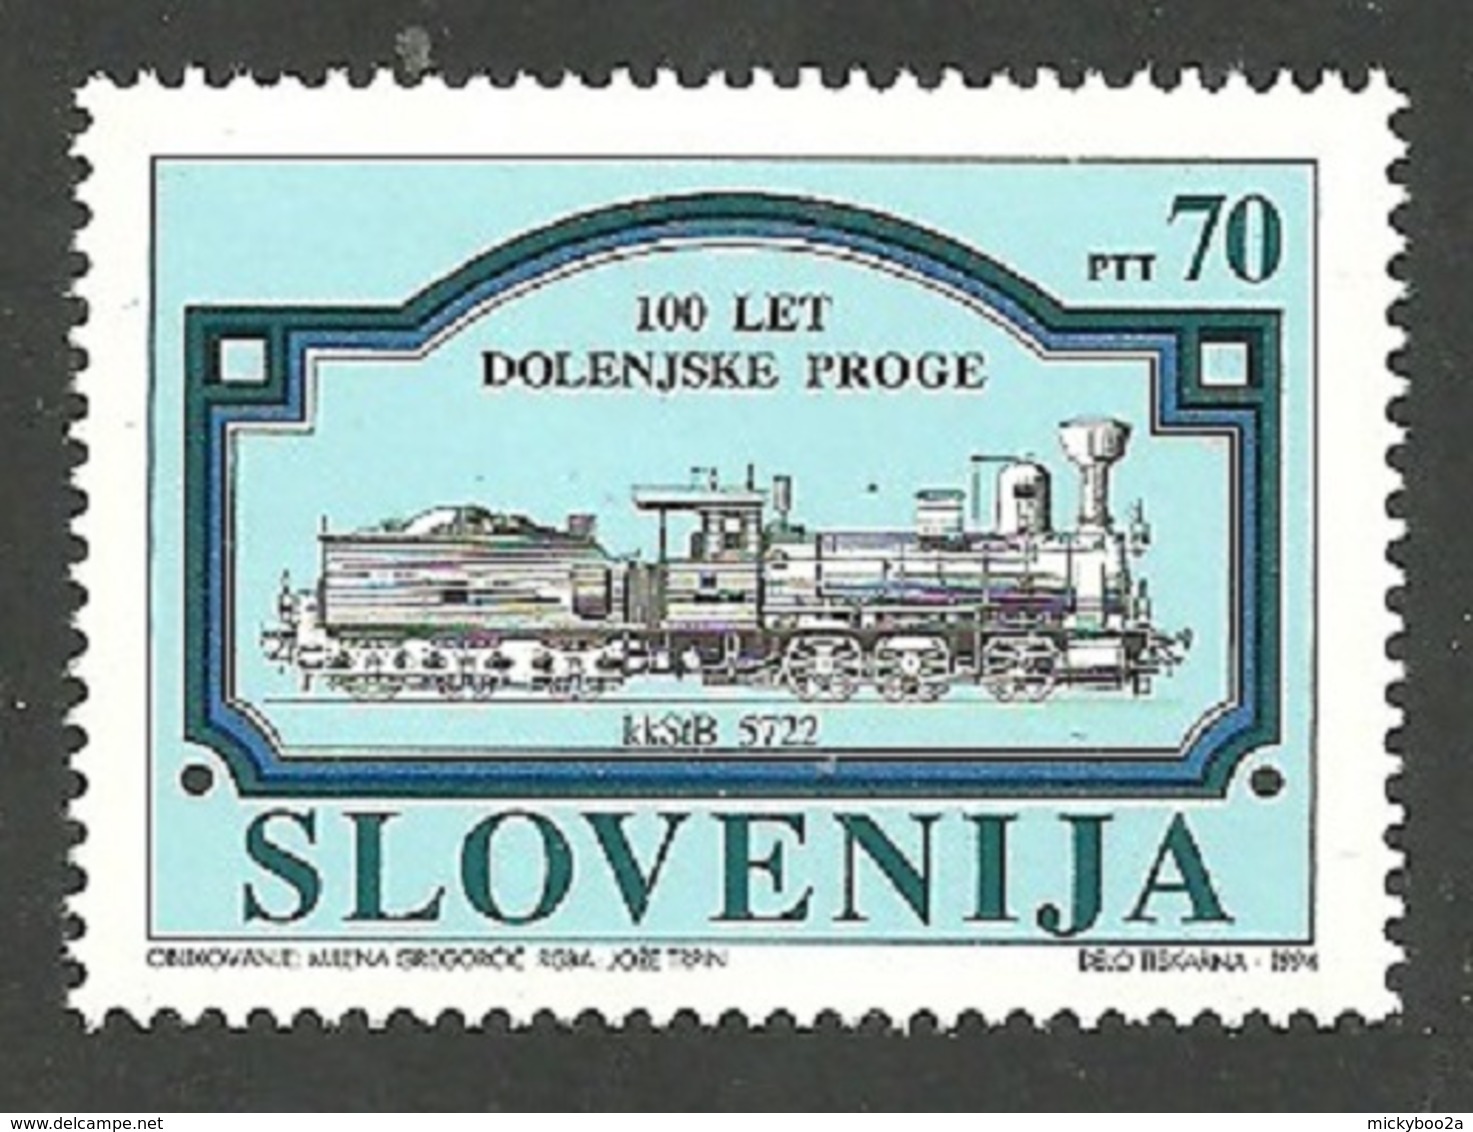 SLOVENIA 1994 TRAINS RAILWAYS CENTENARY SET MNH - Slovenia